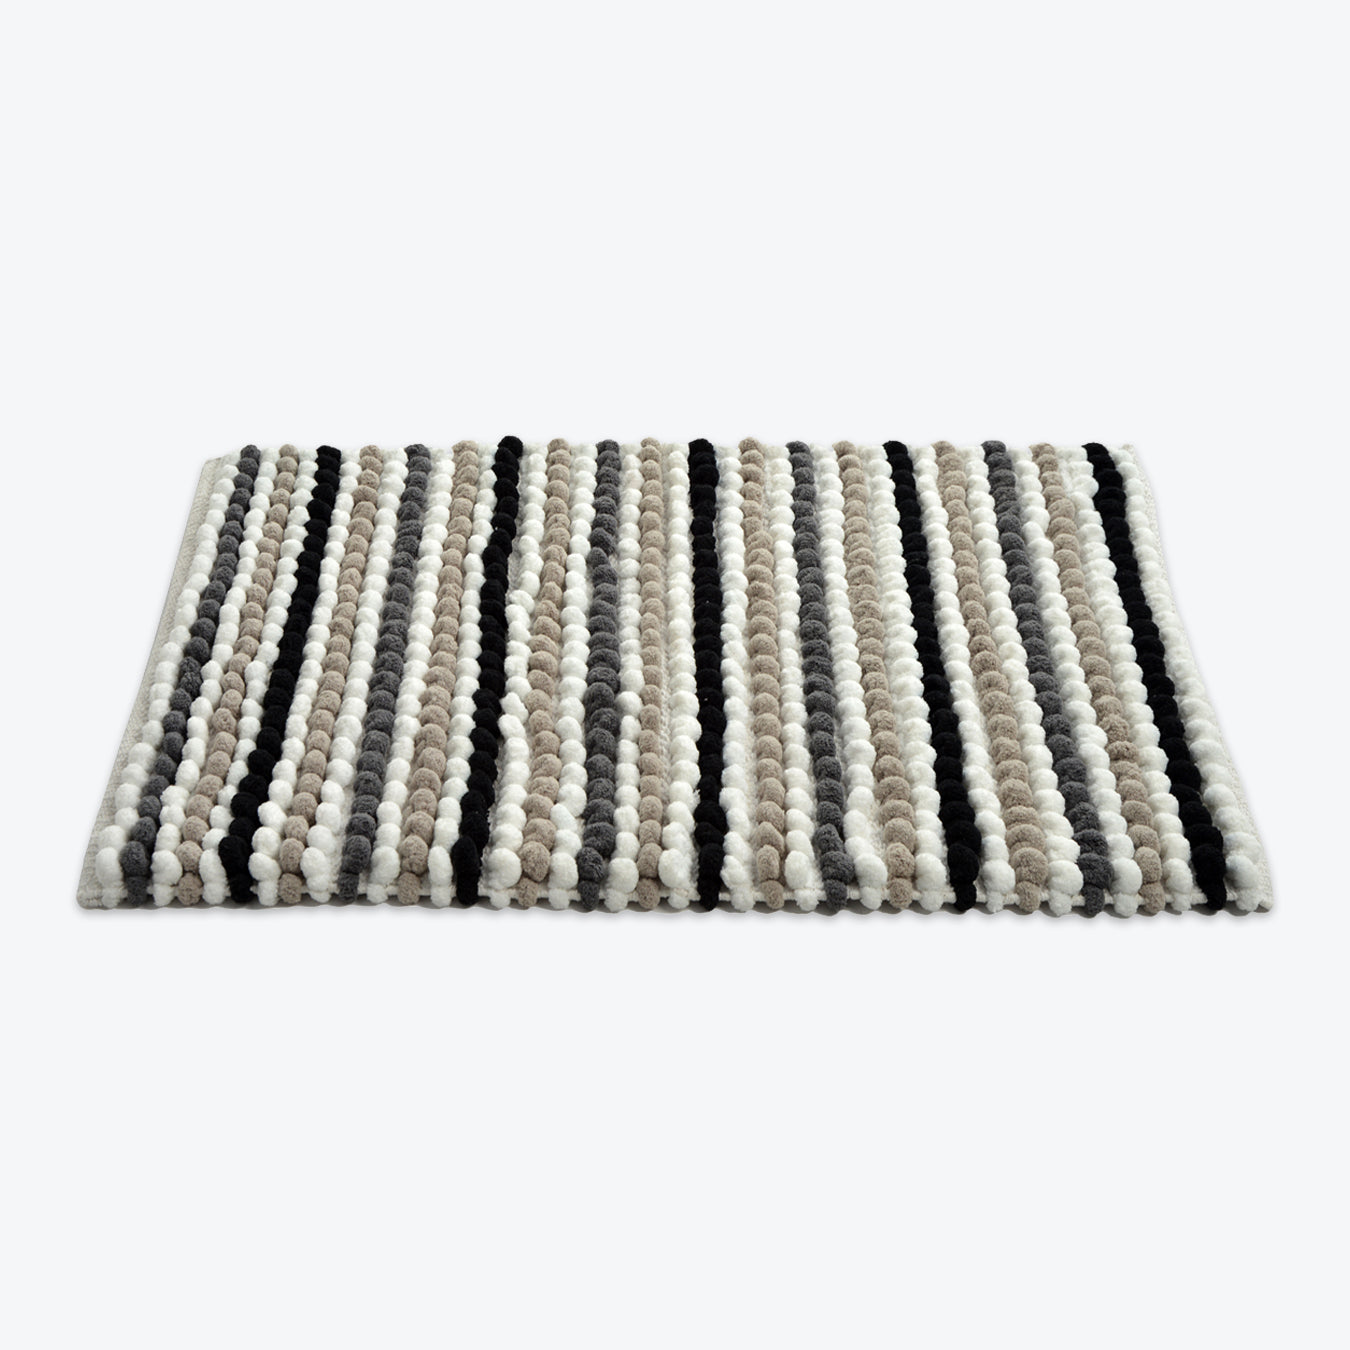 Monochrome chunky bobble bath mat - luxury striped thick handwoven bathroom rugs